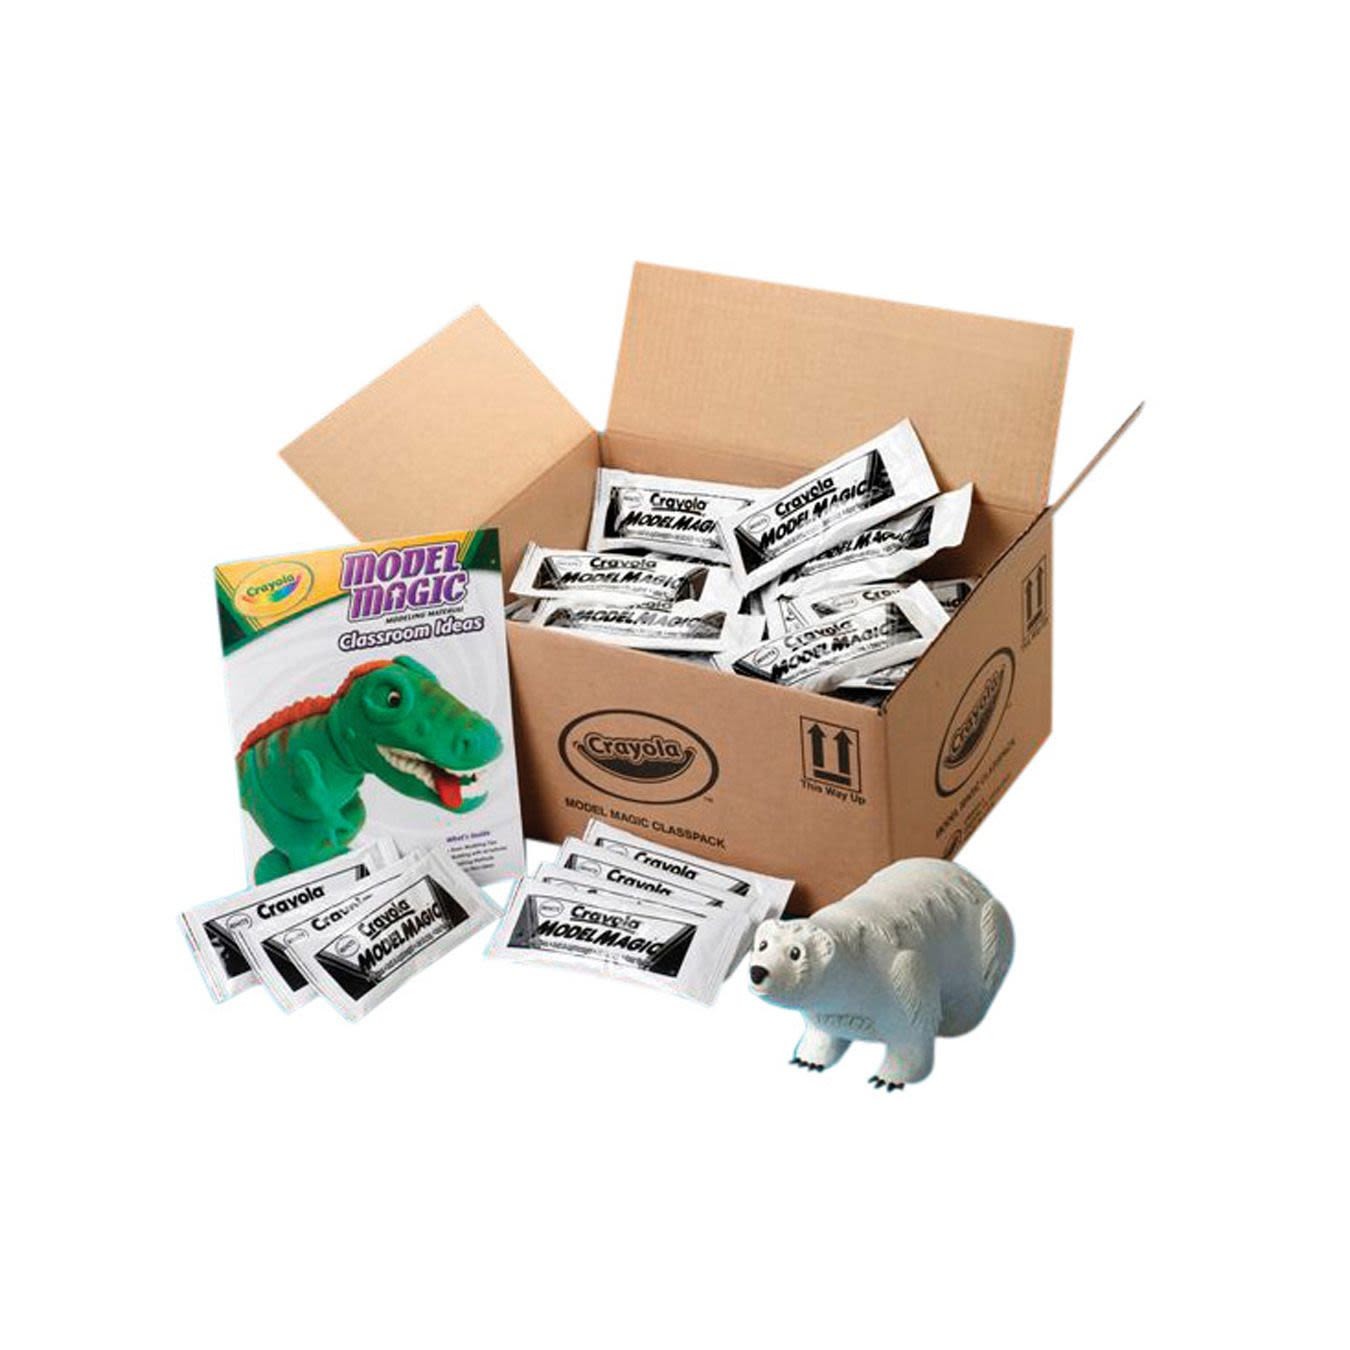 Buy Crayola® Model Magic White Classpack® (Pack of 75) at S&S Worldwide